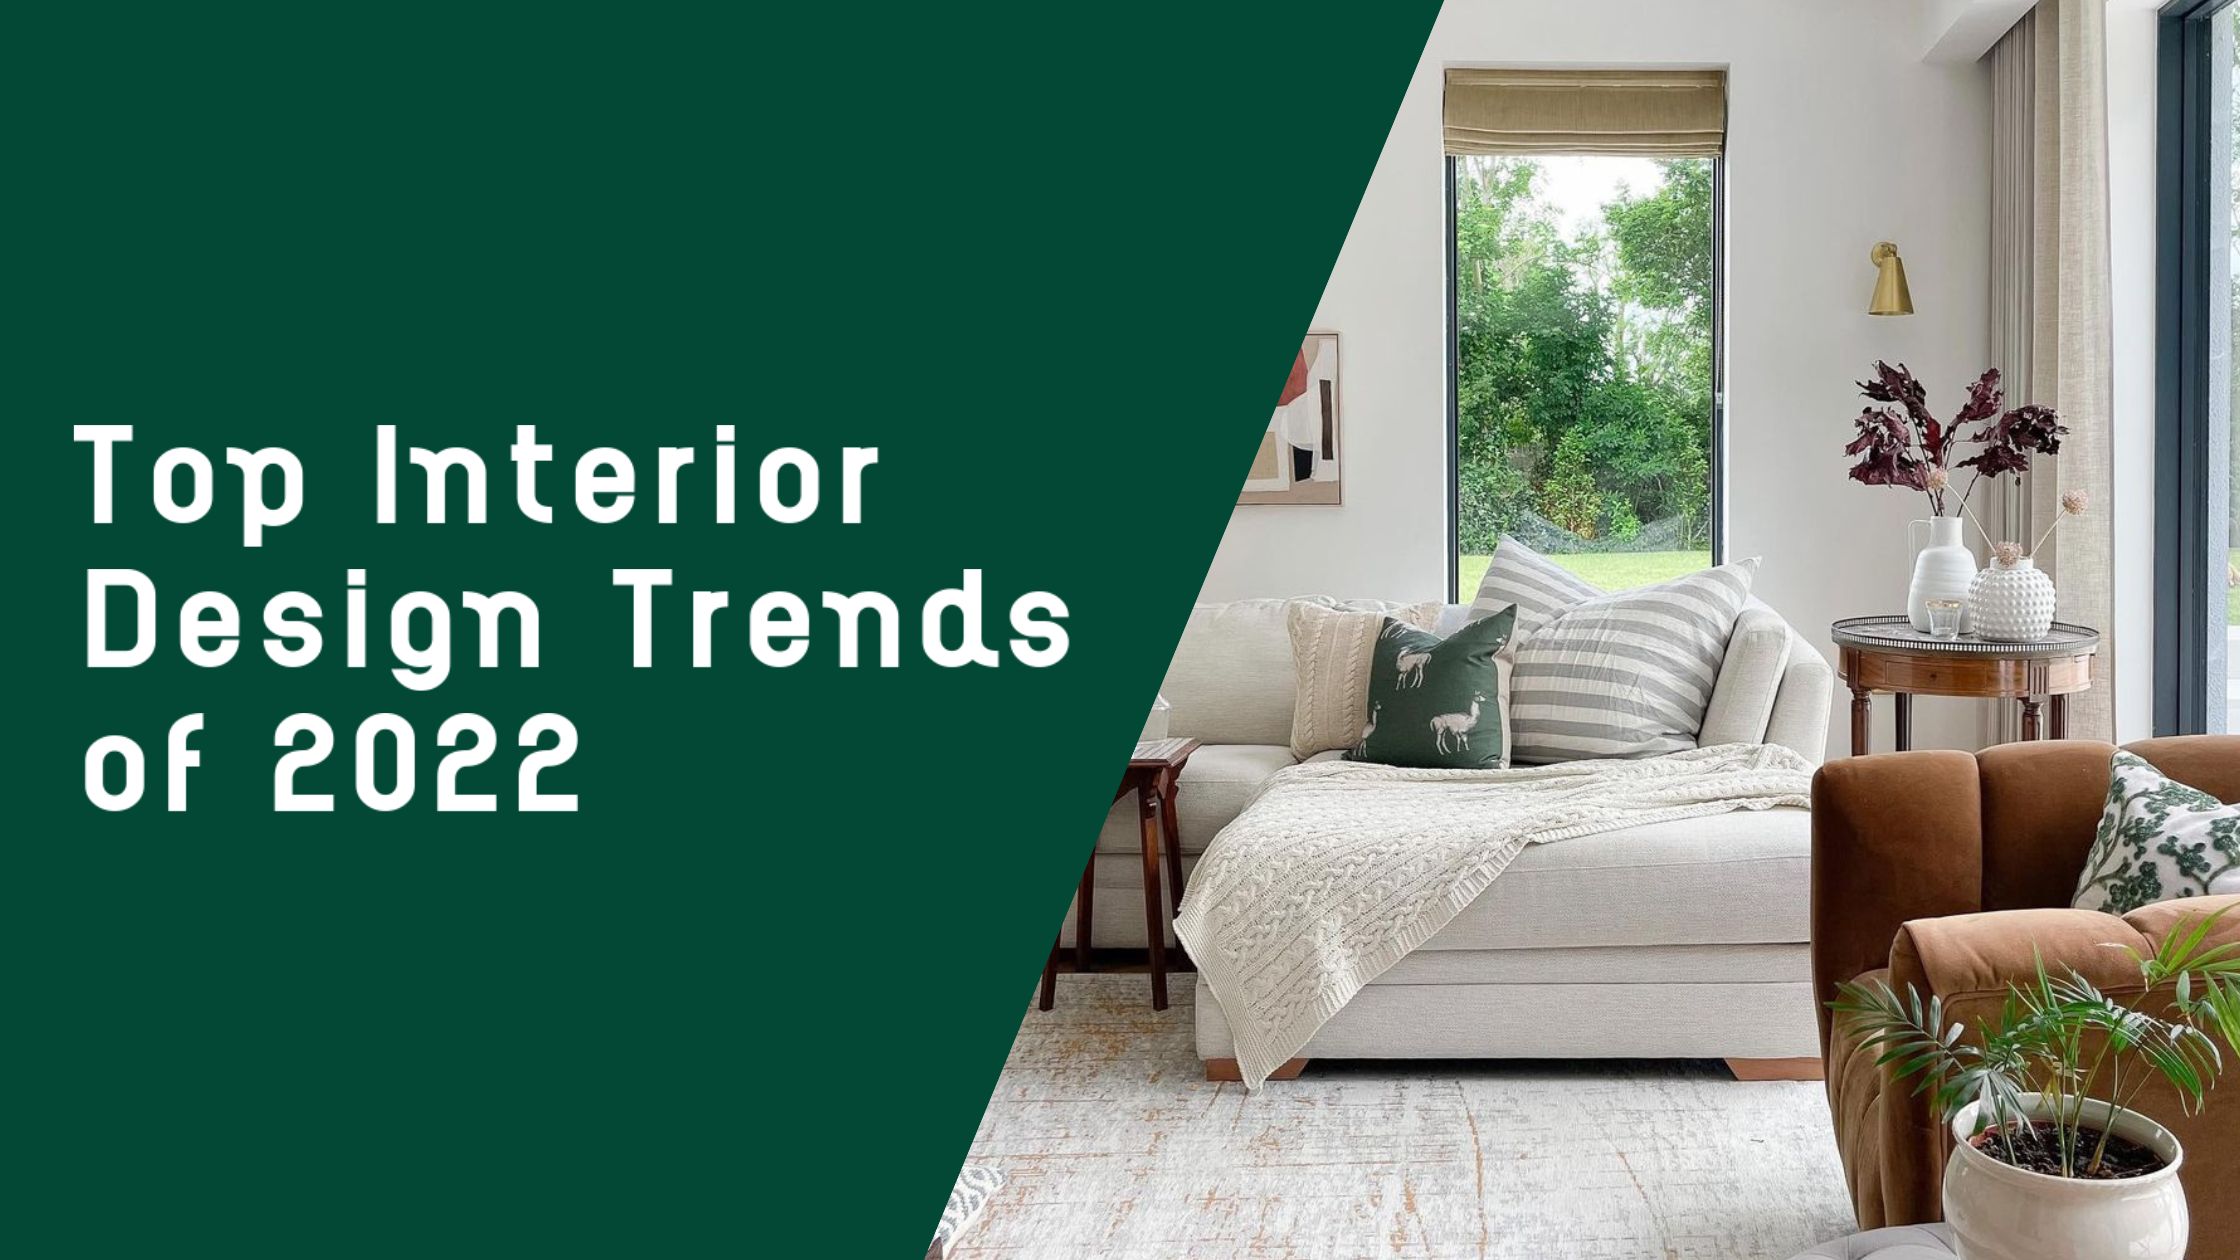 Top Interior Design Trends of 2022